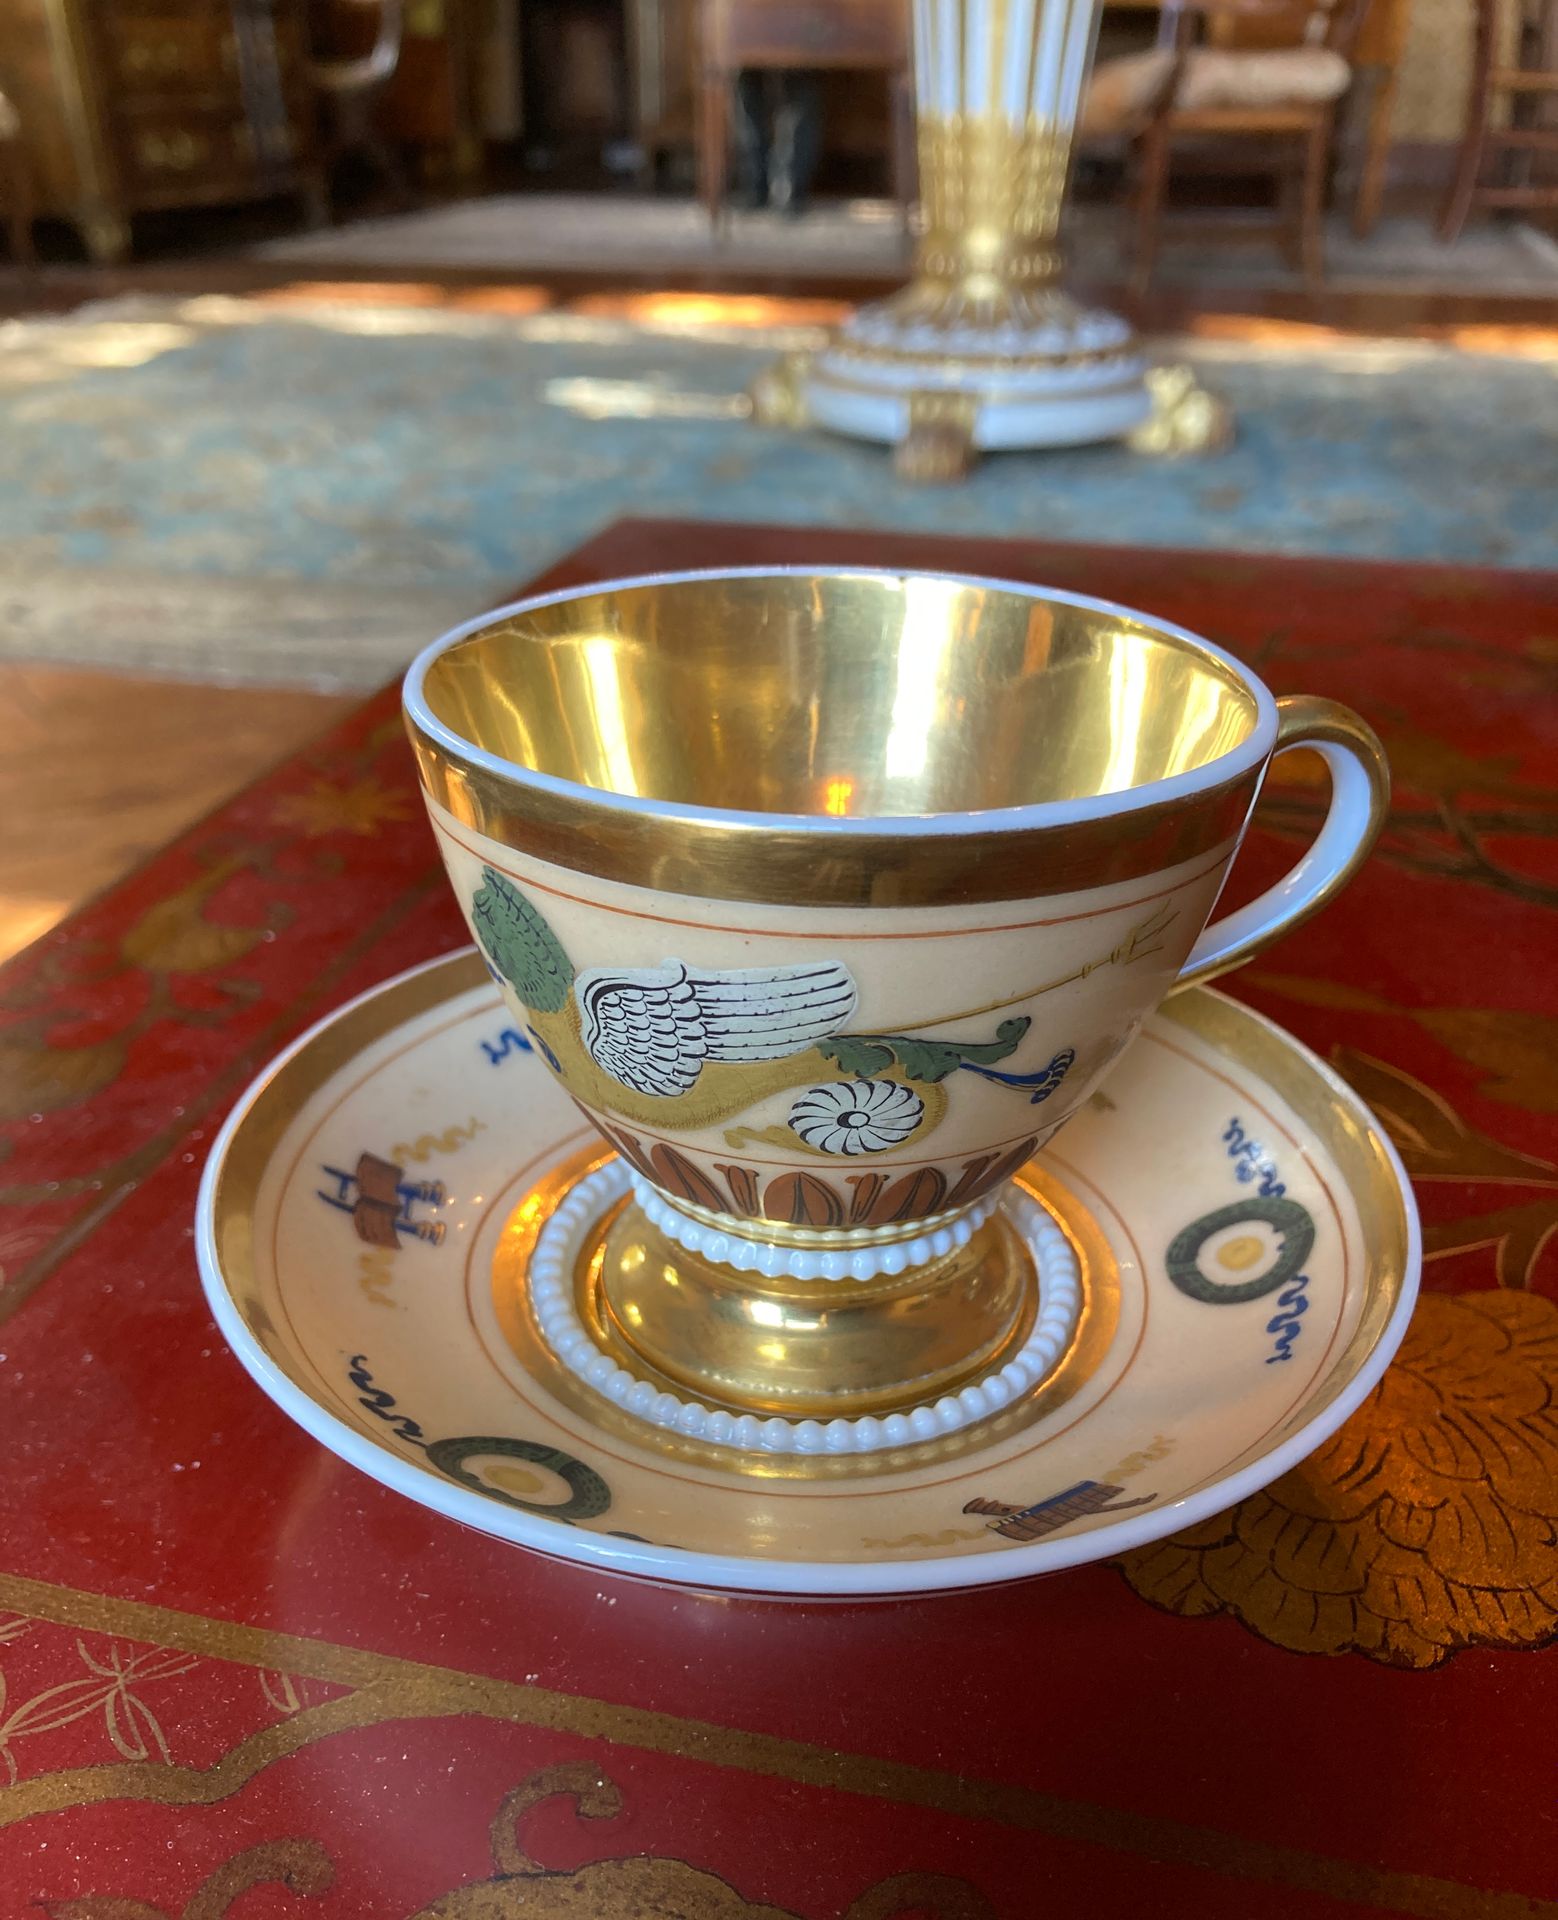 Null 44.迈森

一个瓷杯和碟子

古董装饰品

镀金杯